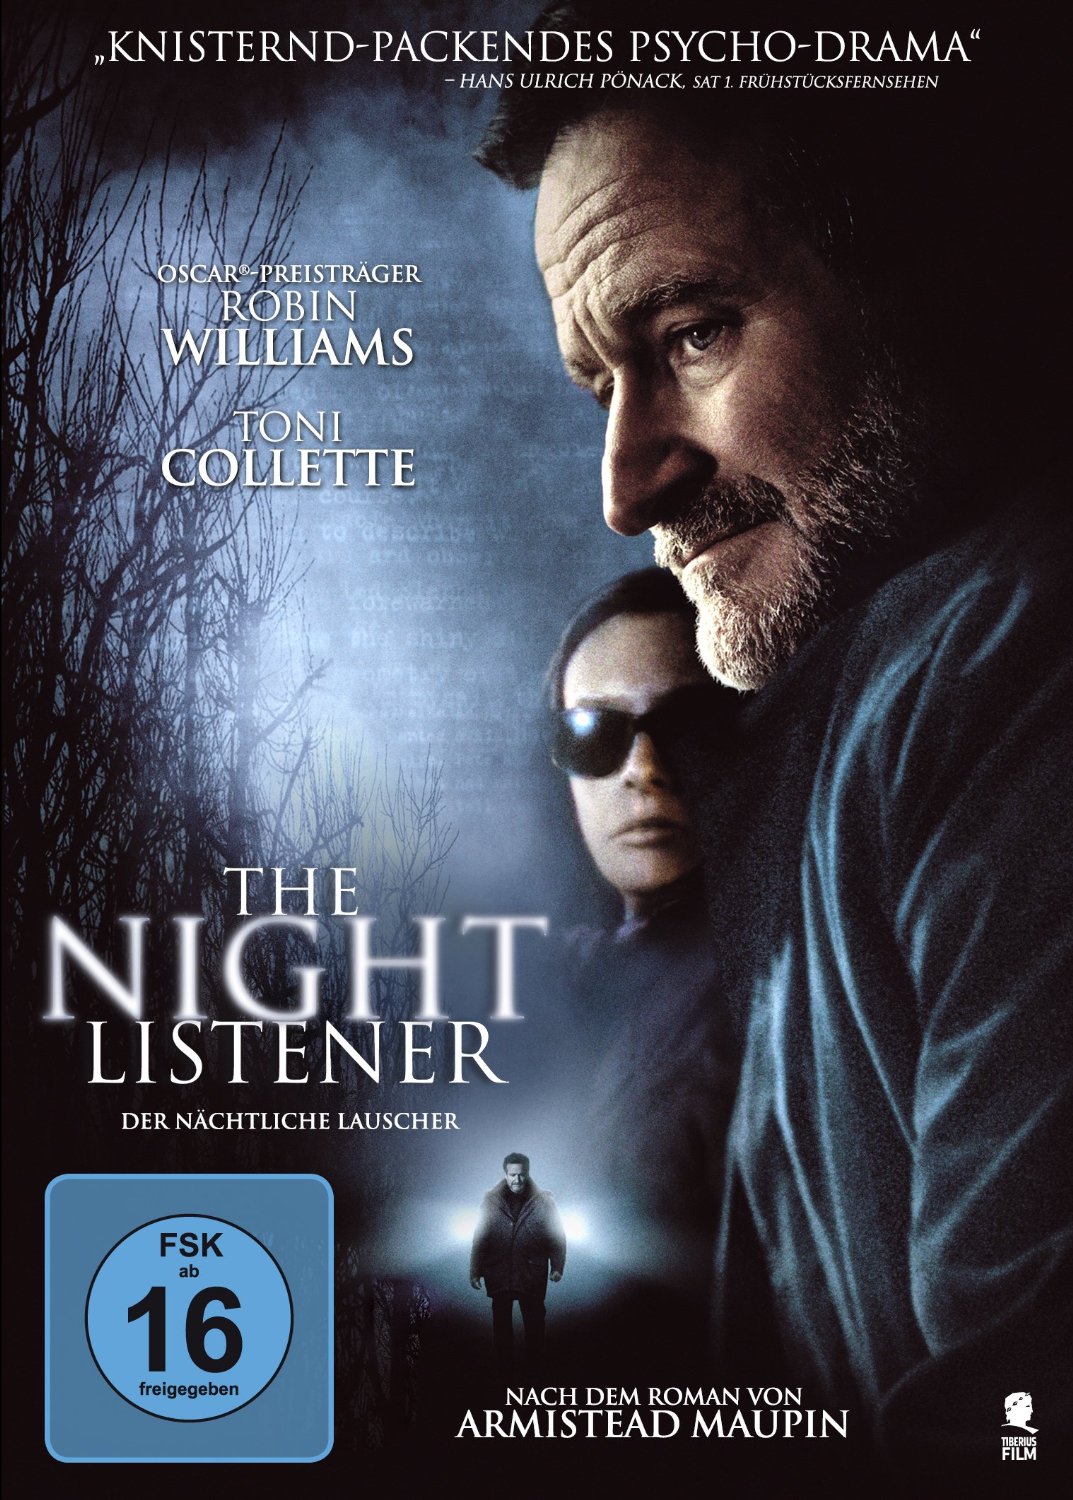 The Night Listener #6